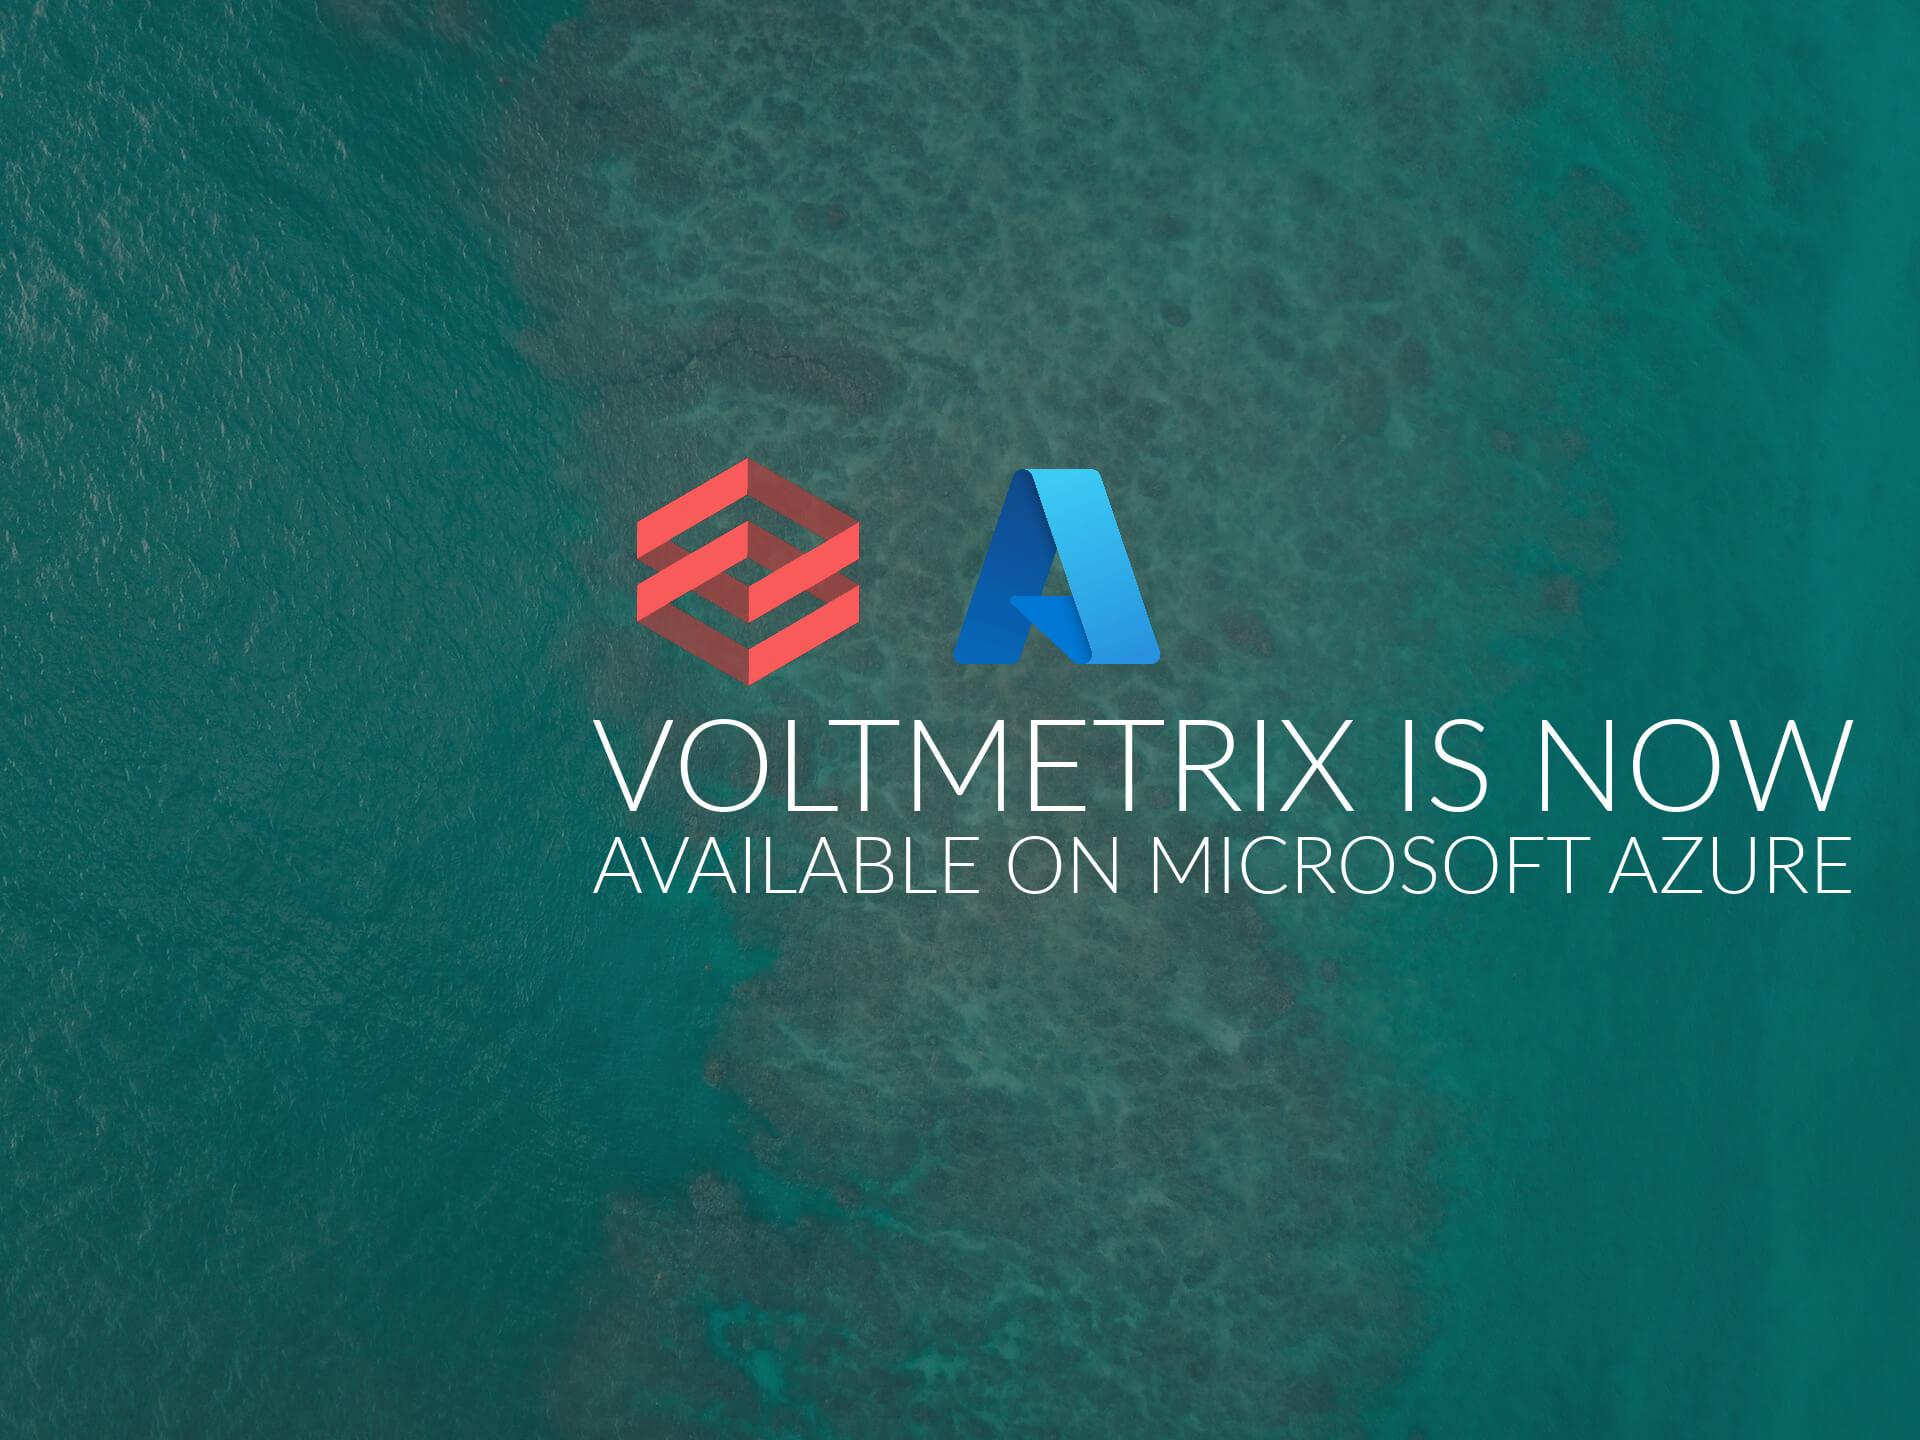 Microsoft Azure, Voltmetrix, Data Solutions